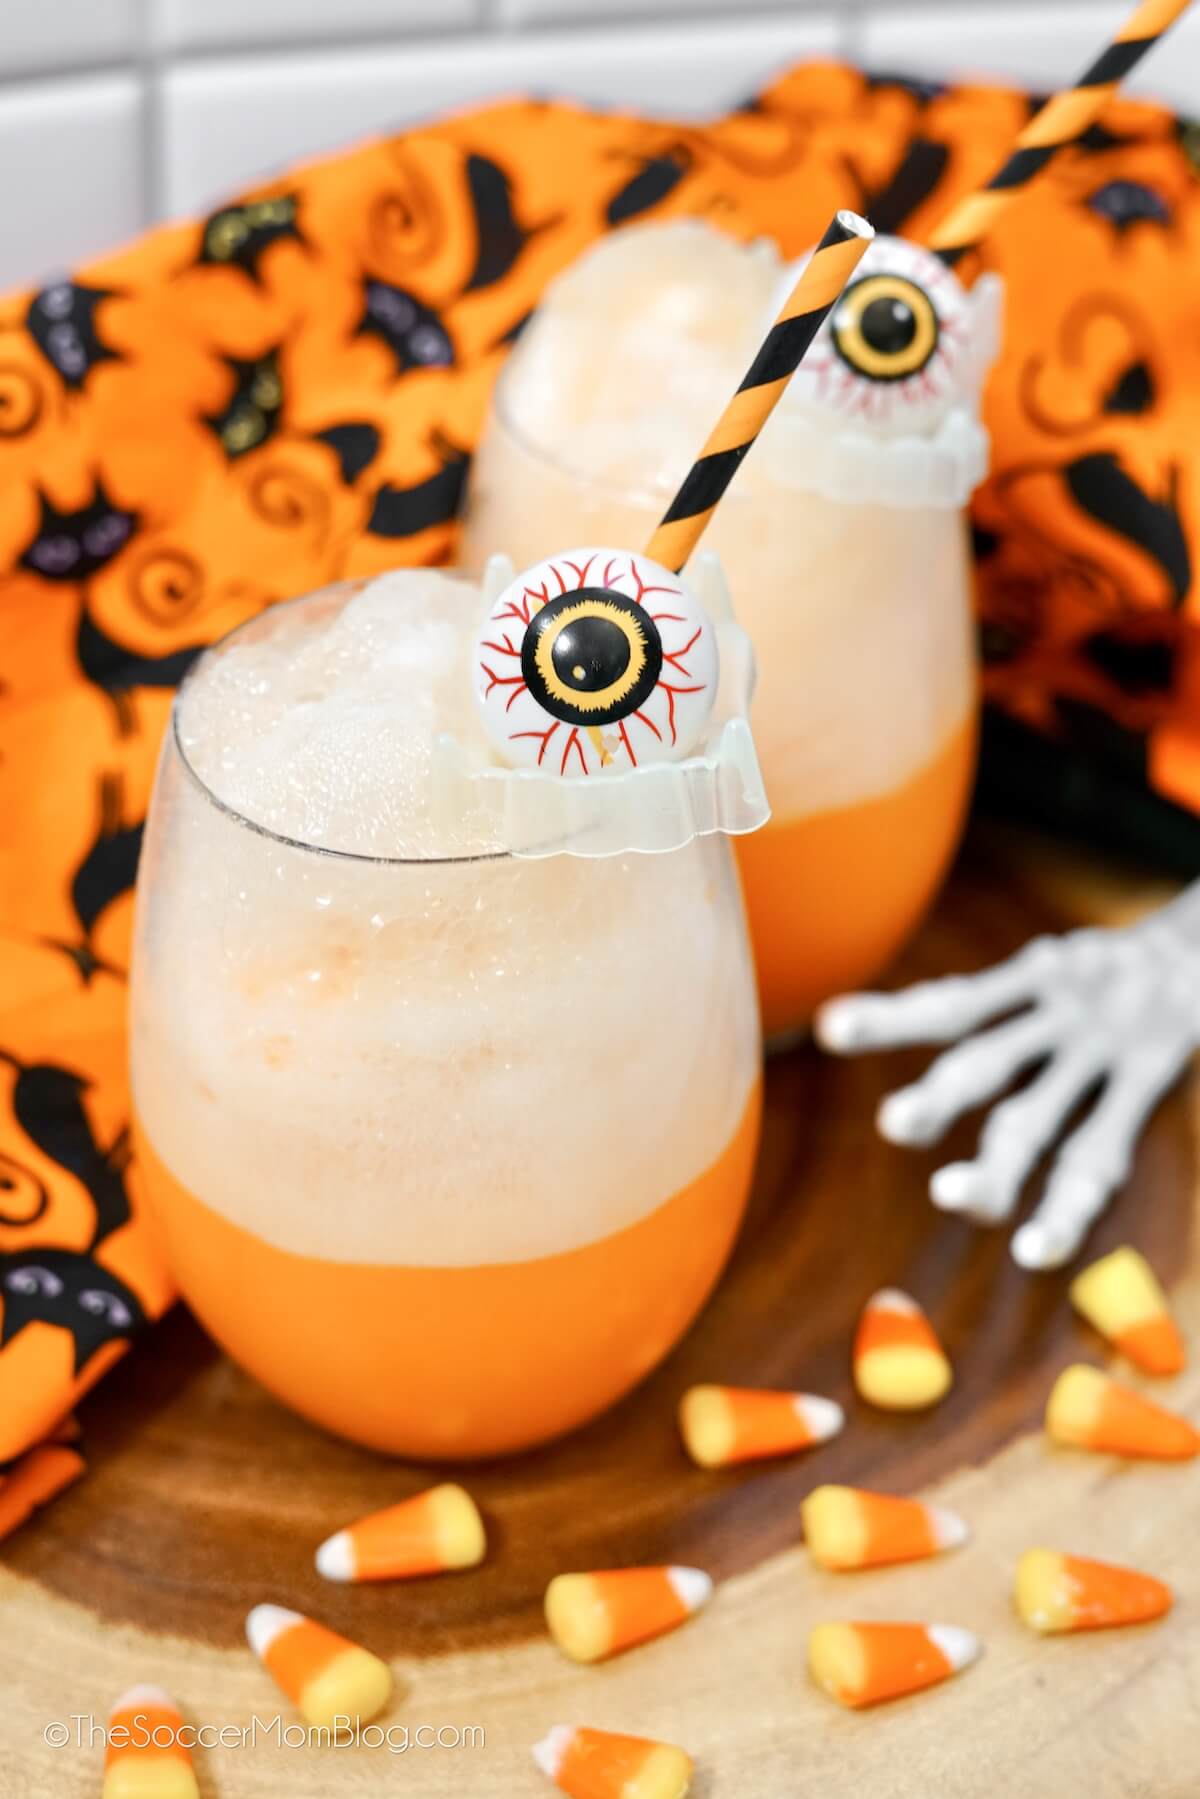 Halloween Floats made with orange soda and garnished with plastic eyeballs